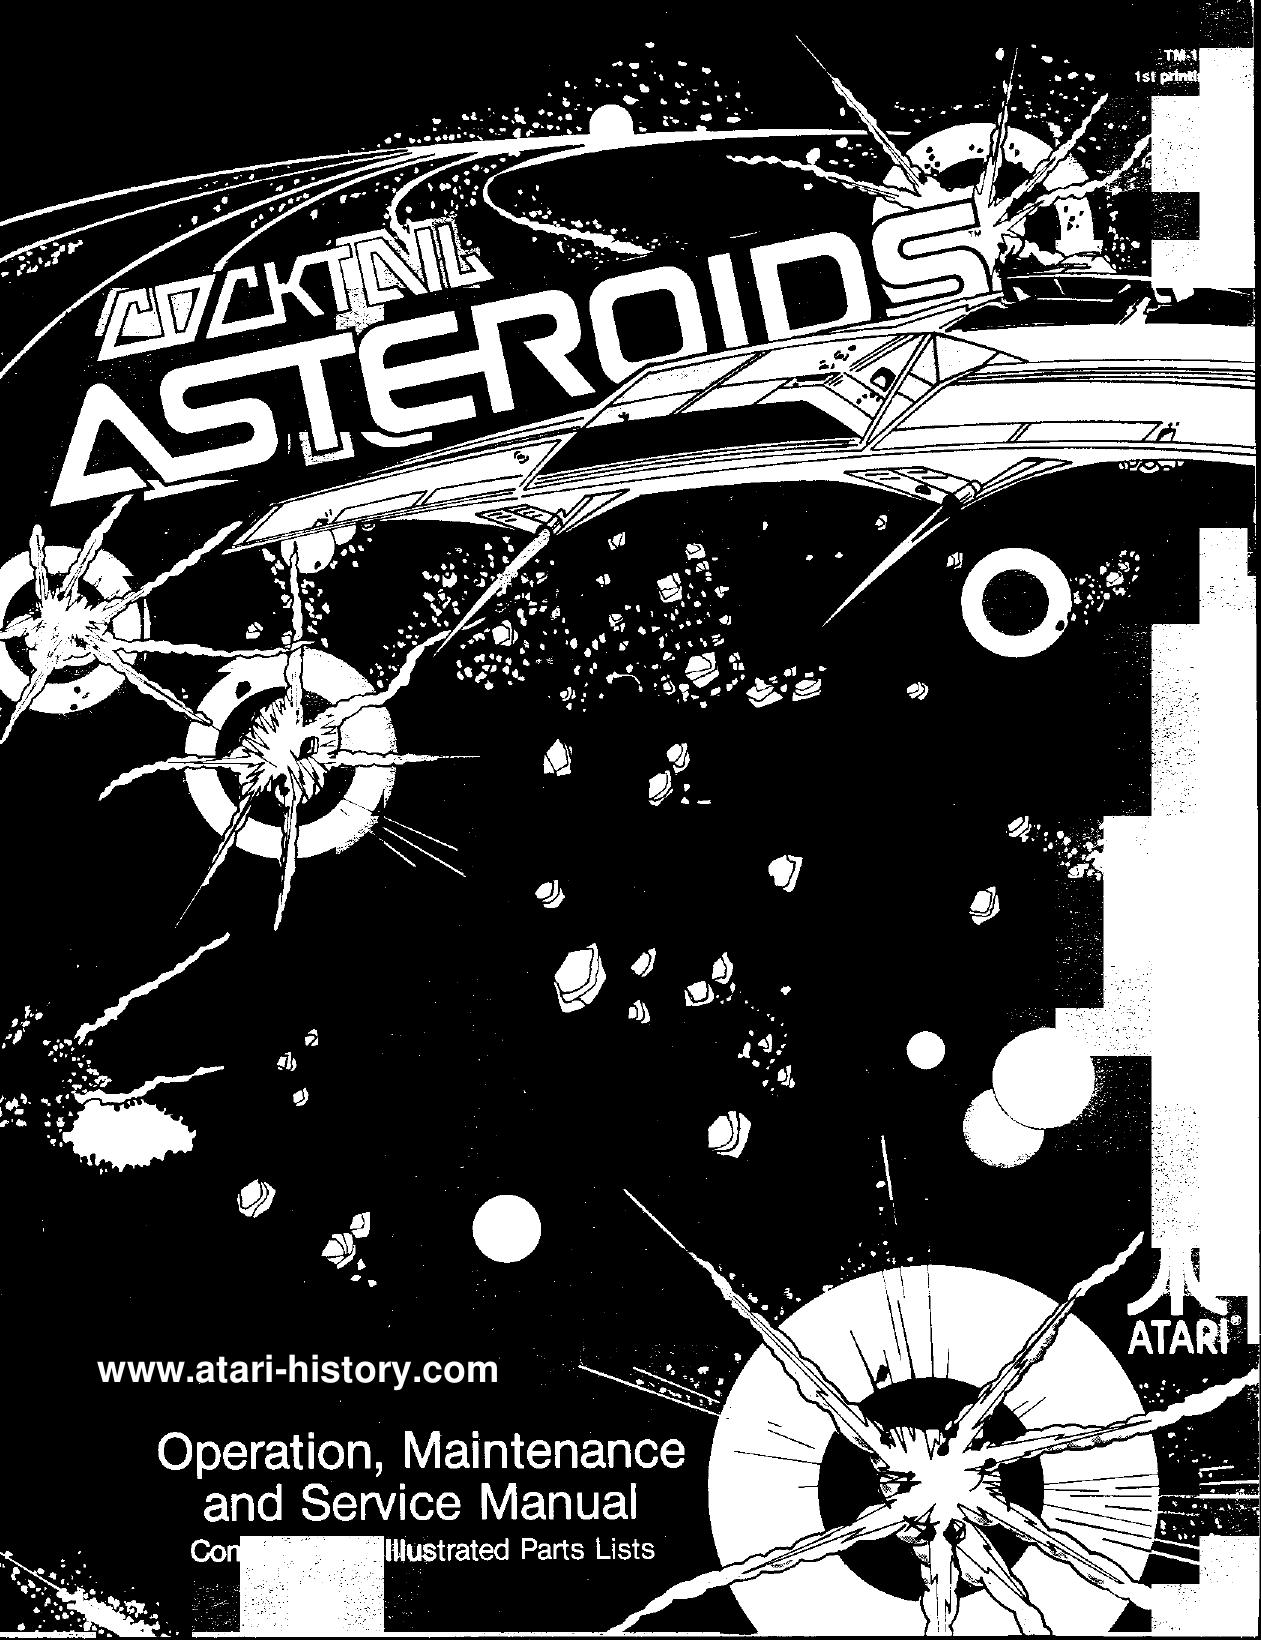 Asteroids Cocktail TM-150 1st Printing